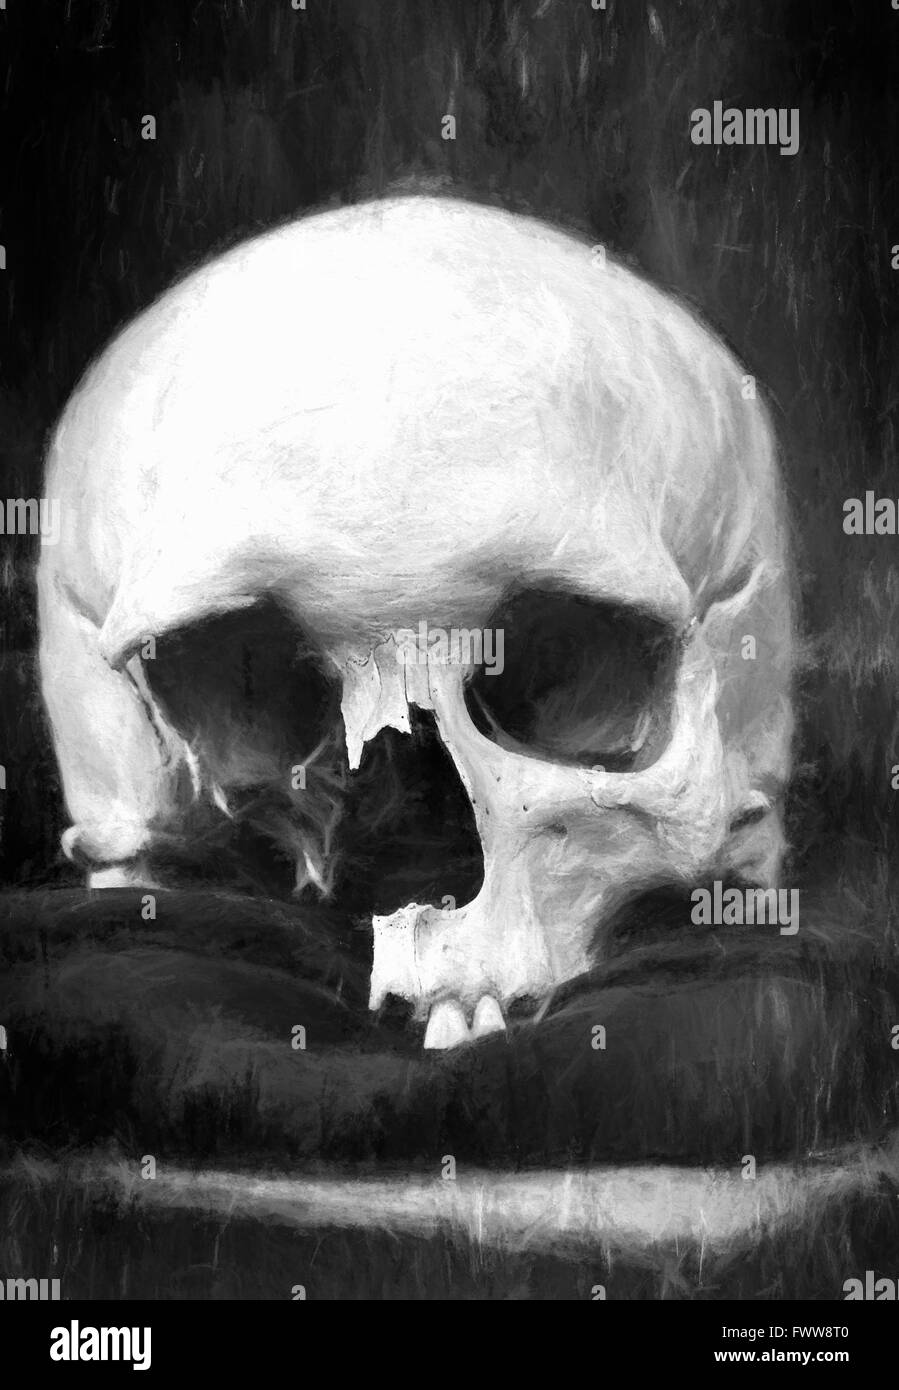 Damaged human skull. Charcoal drawing. Horror scene. Stock Photo